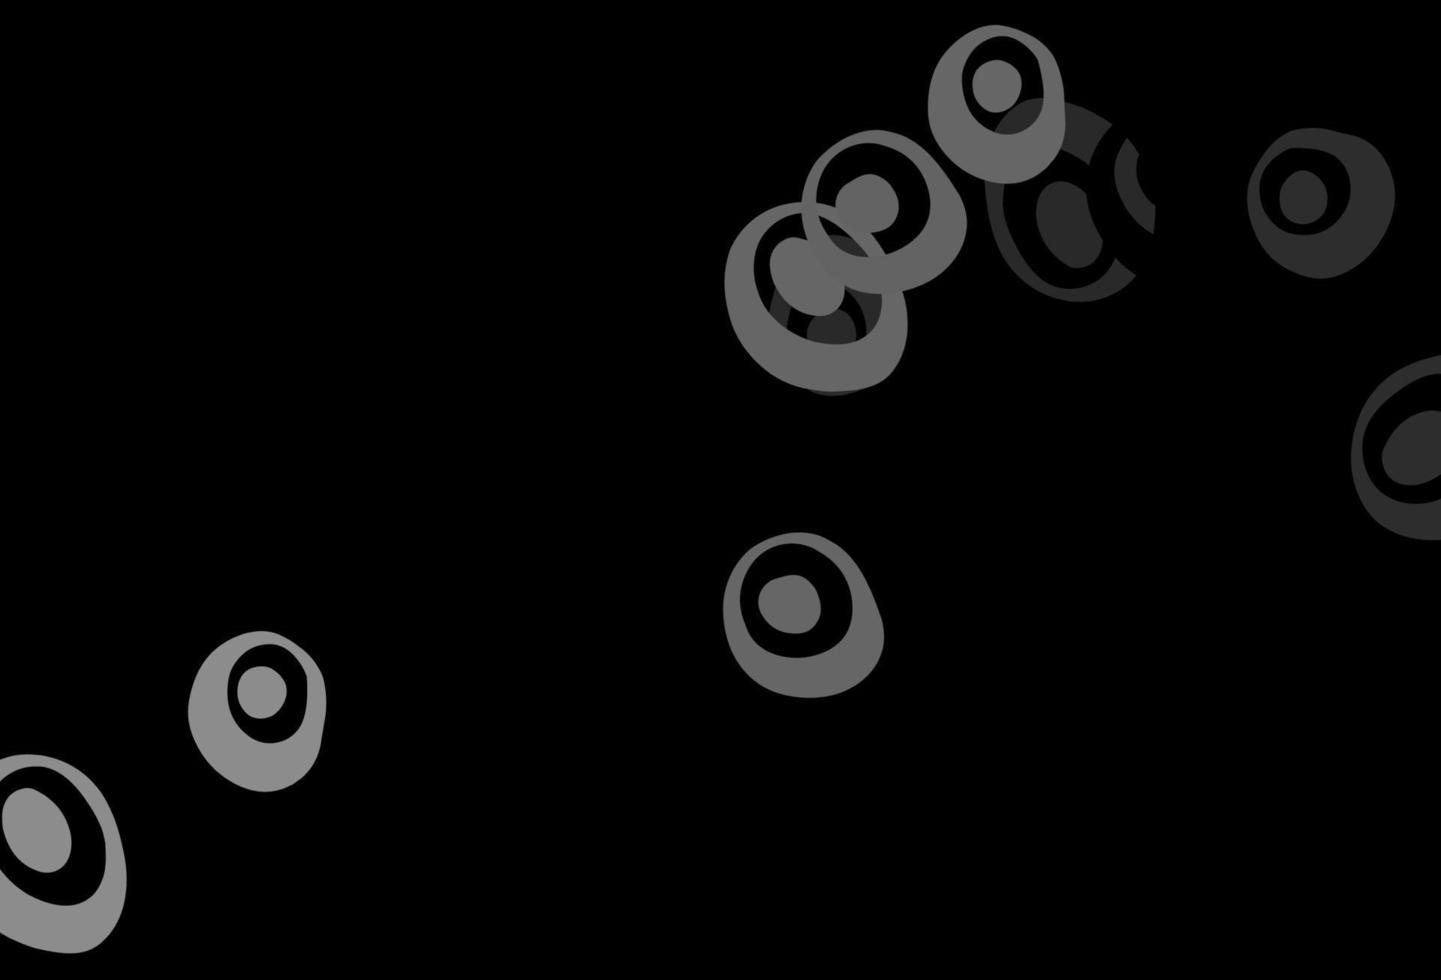 Dark Silver, Gray vector layout with circle shapes.